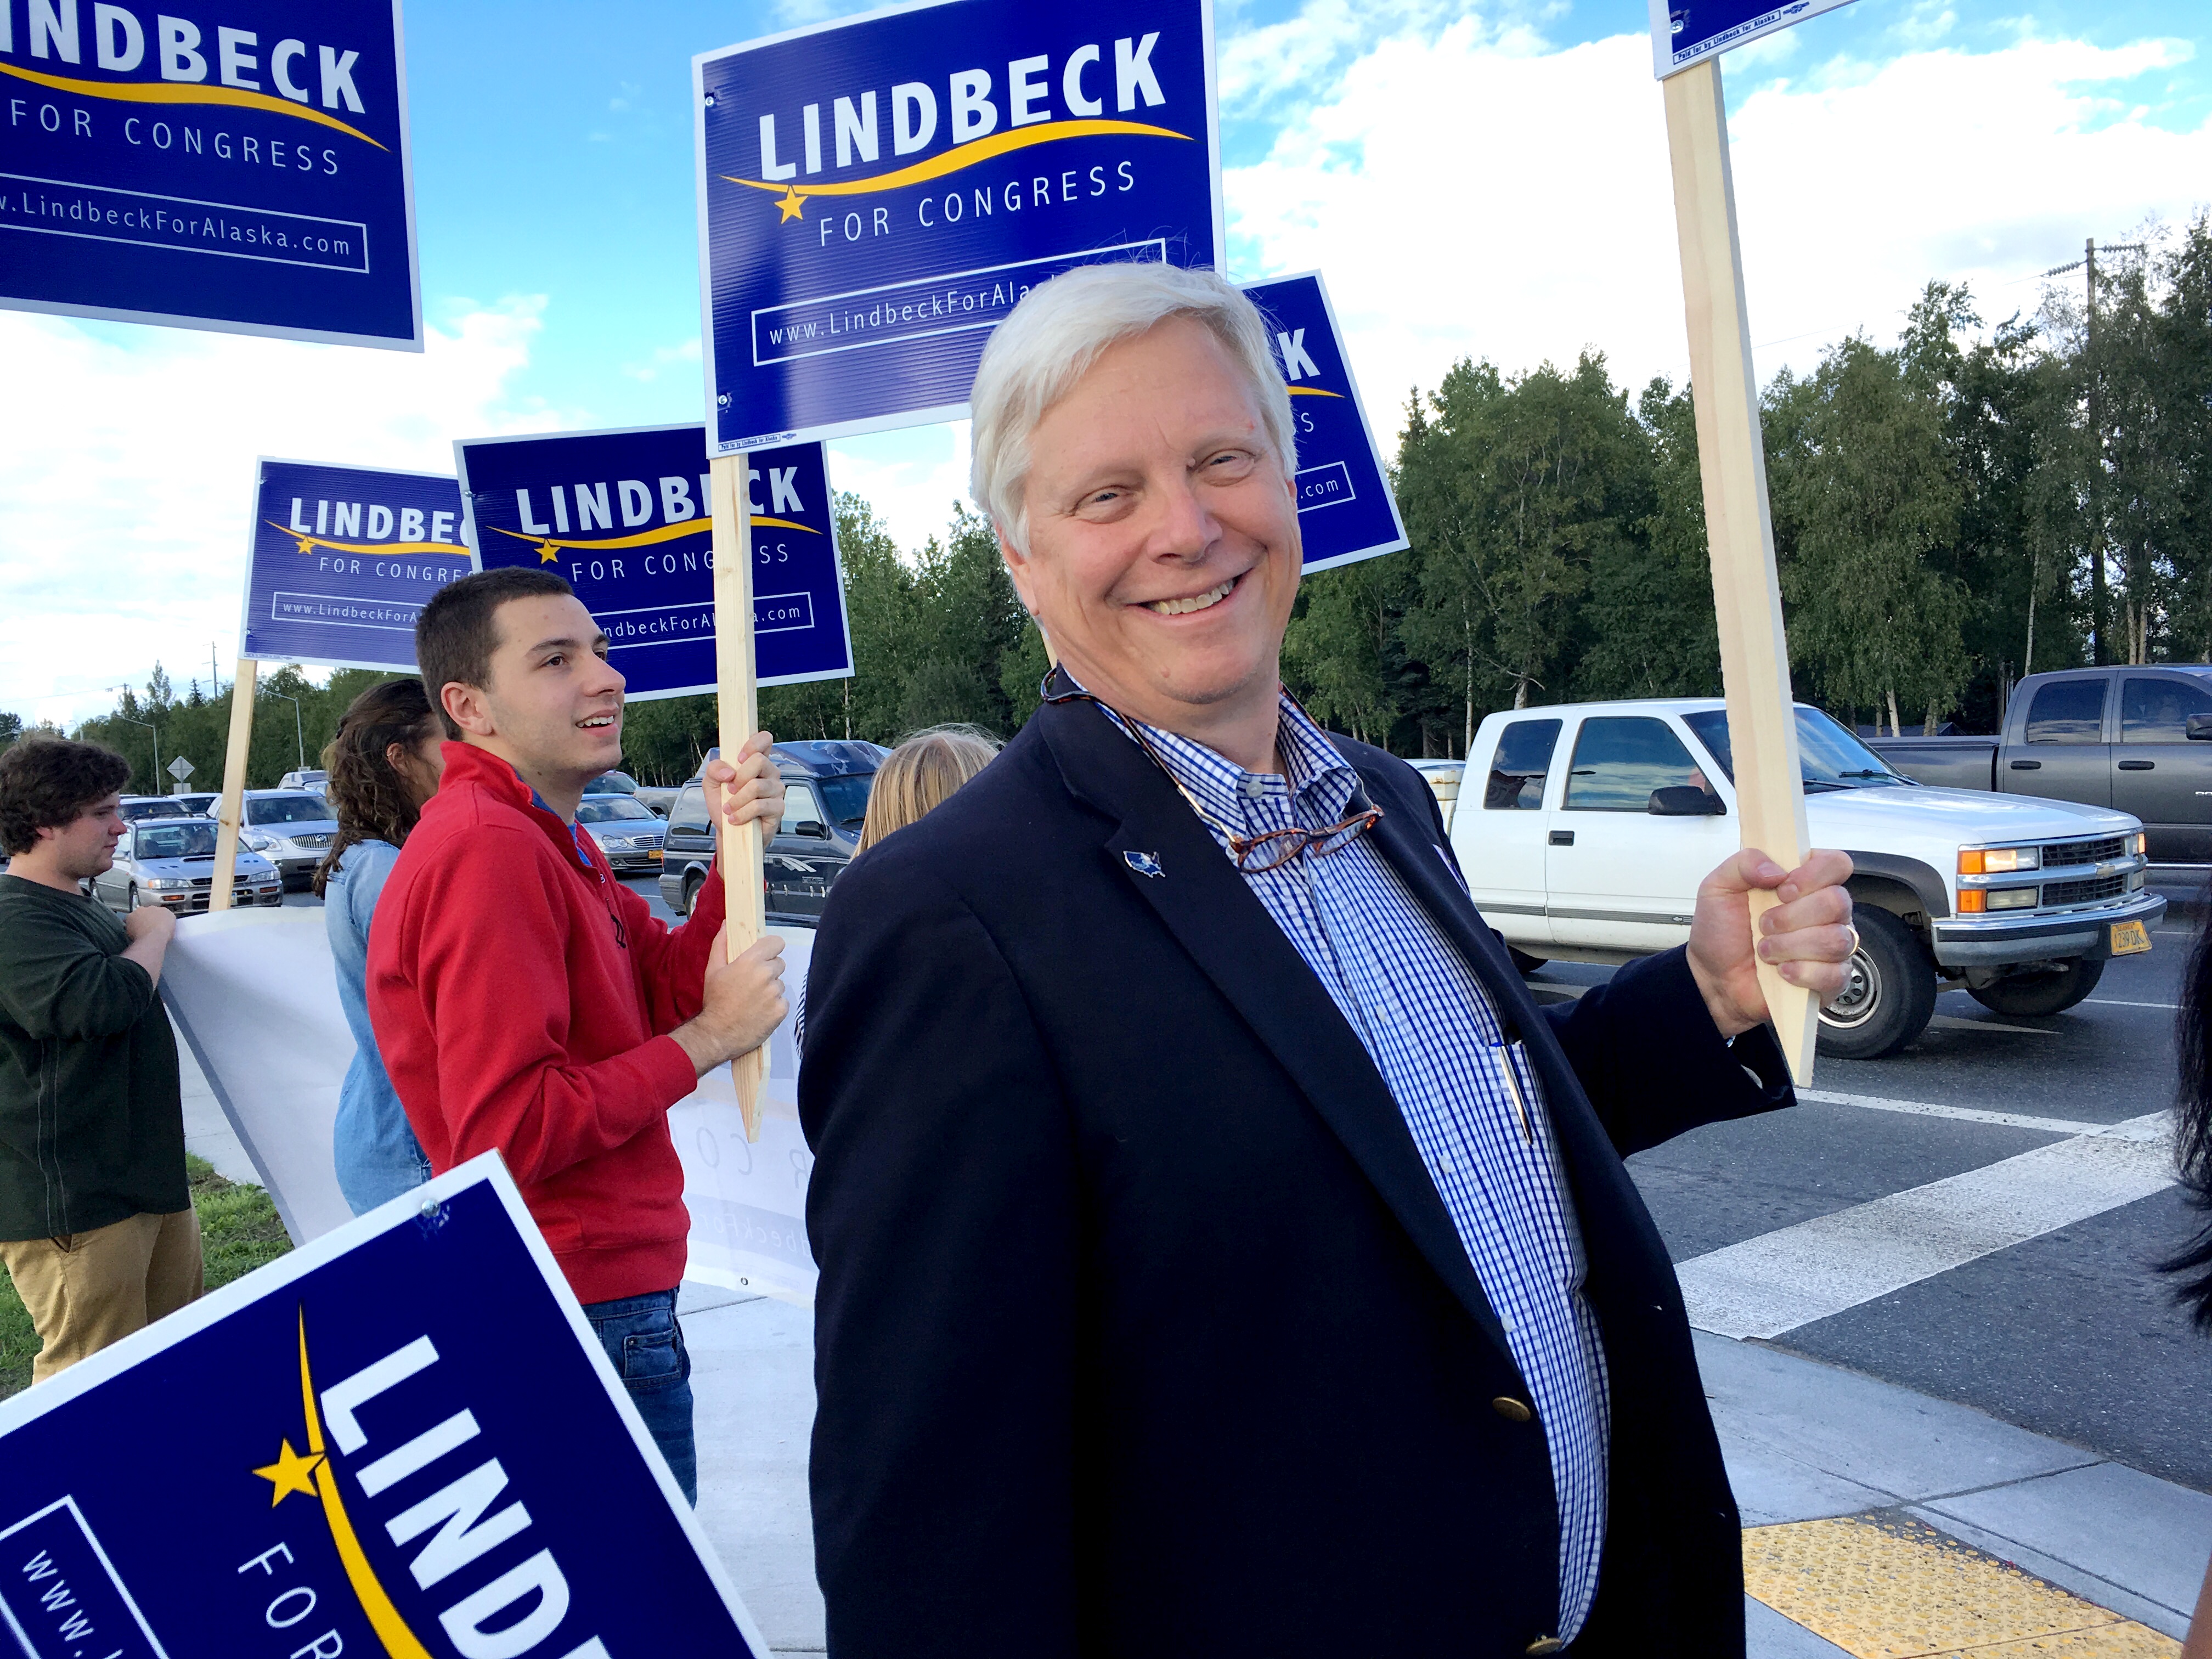 Steve Lindbeck is challenging U.S. Rep. Don Young. (Photo by Liz Ruskin, Alaska Public Media - Washingotn D.C.)